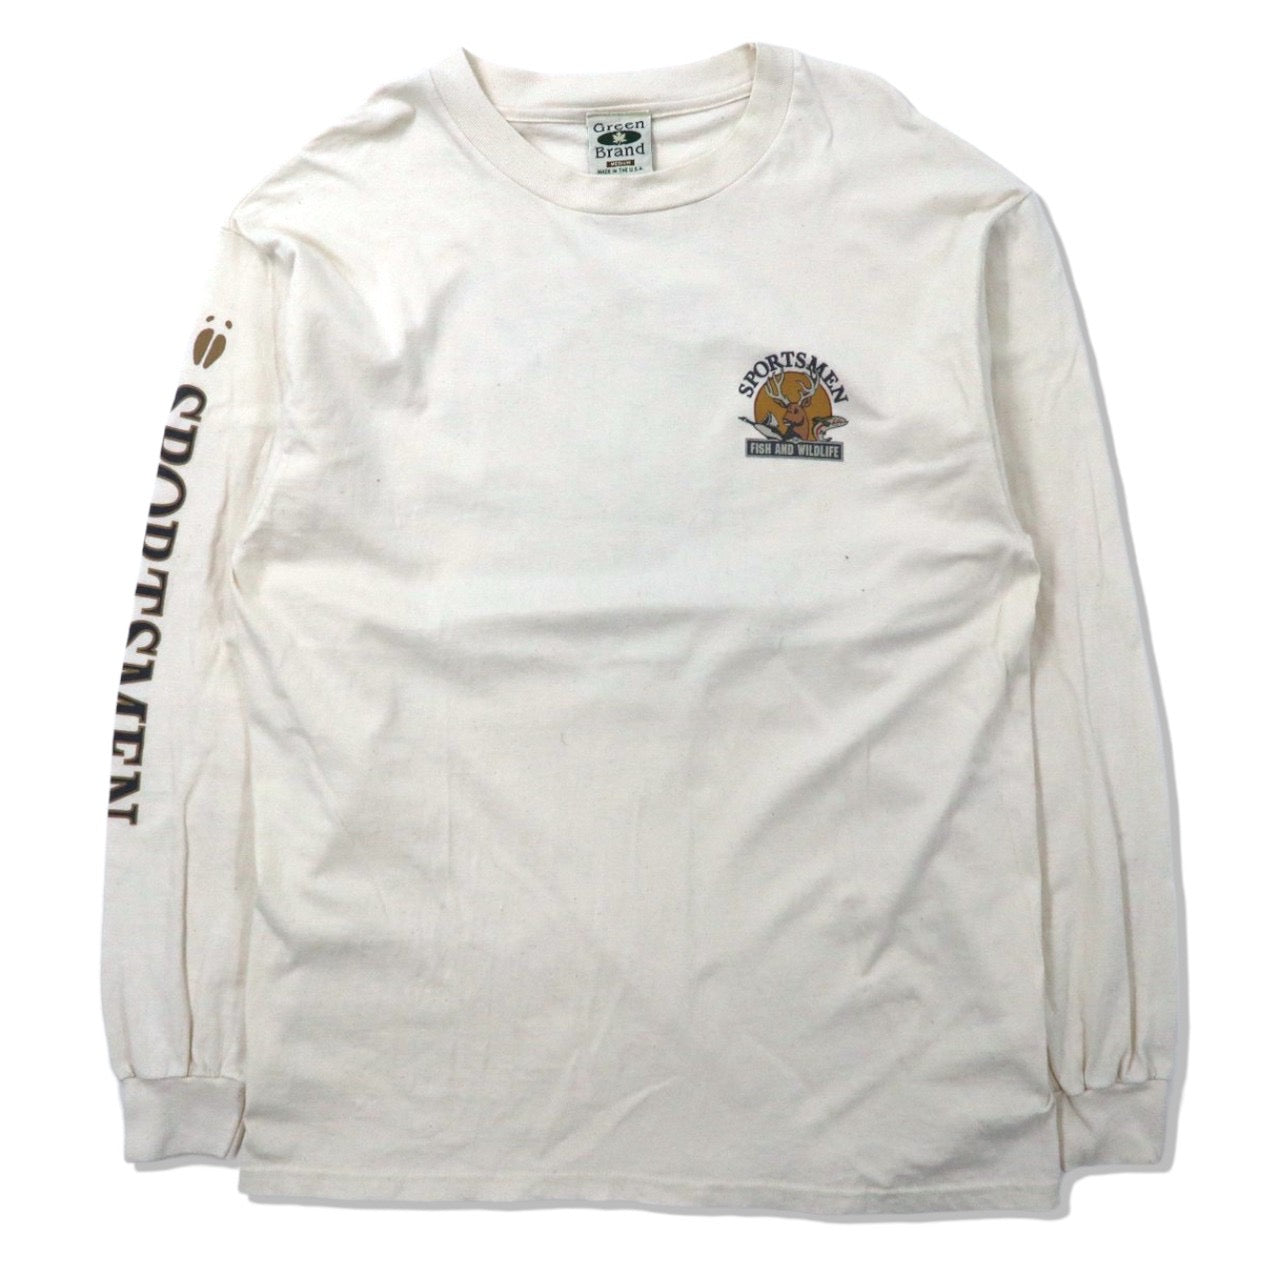 Green Brand ビッグサイズ ロングスリーブTシャツ M ホワイト コットン バックロゴプリント 袖ロゴ FISH AND WILDLIFE USA製